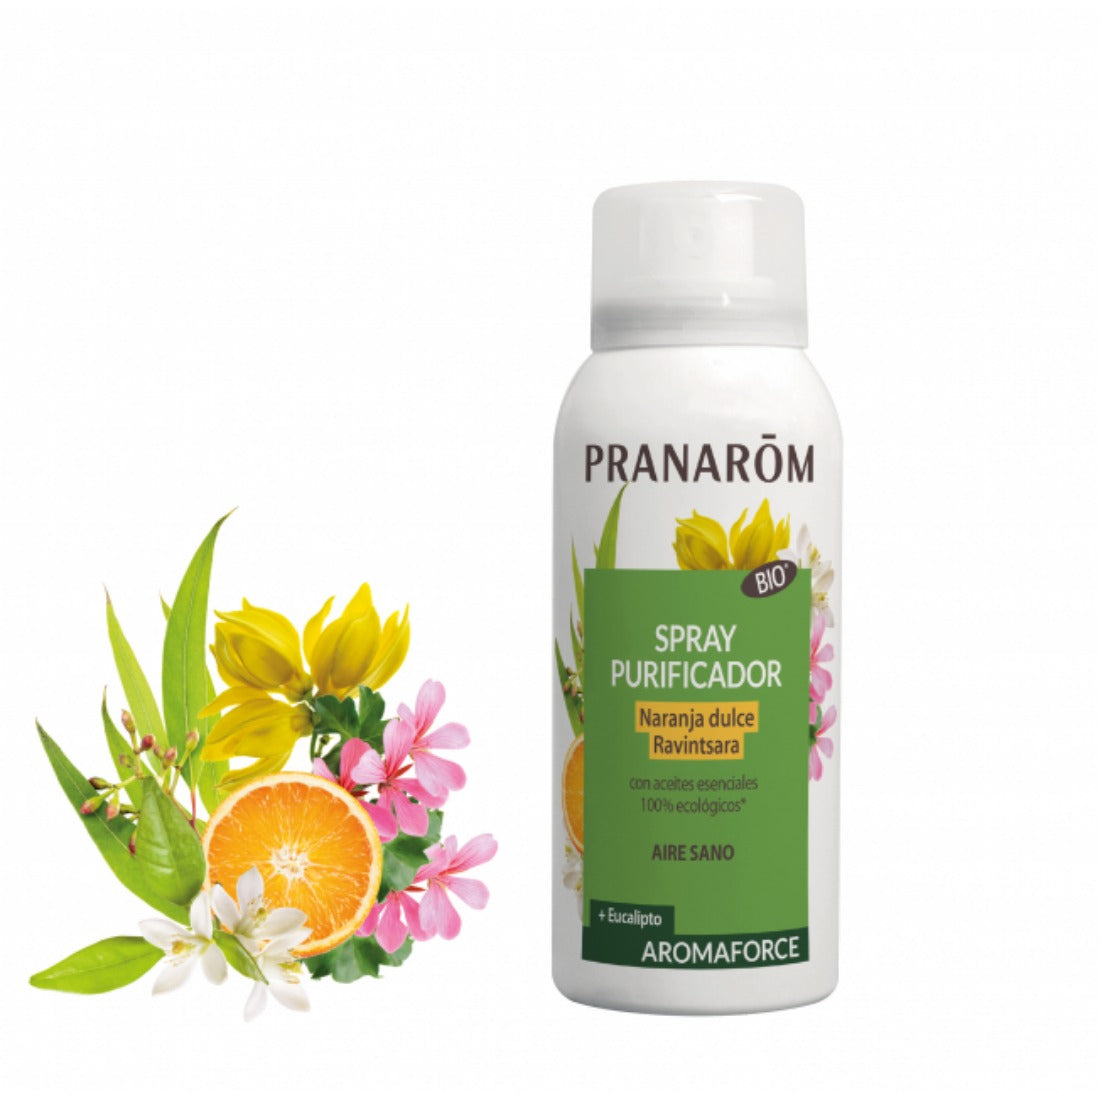 Pranarom Aromaforce Spray Purificador Naranja dulce y Ravintsara 75mL